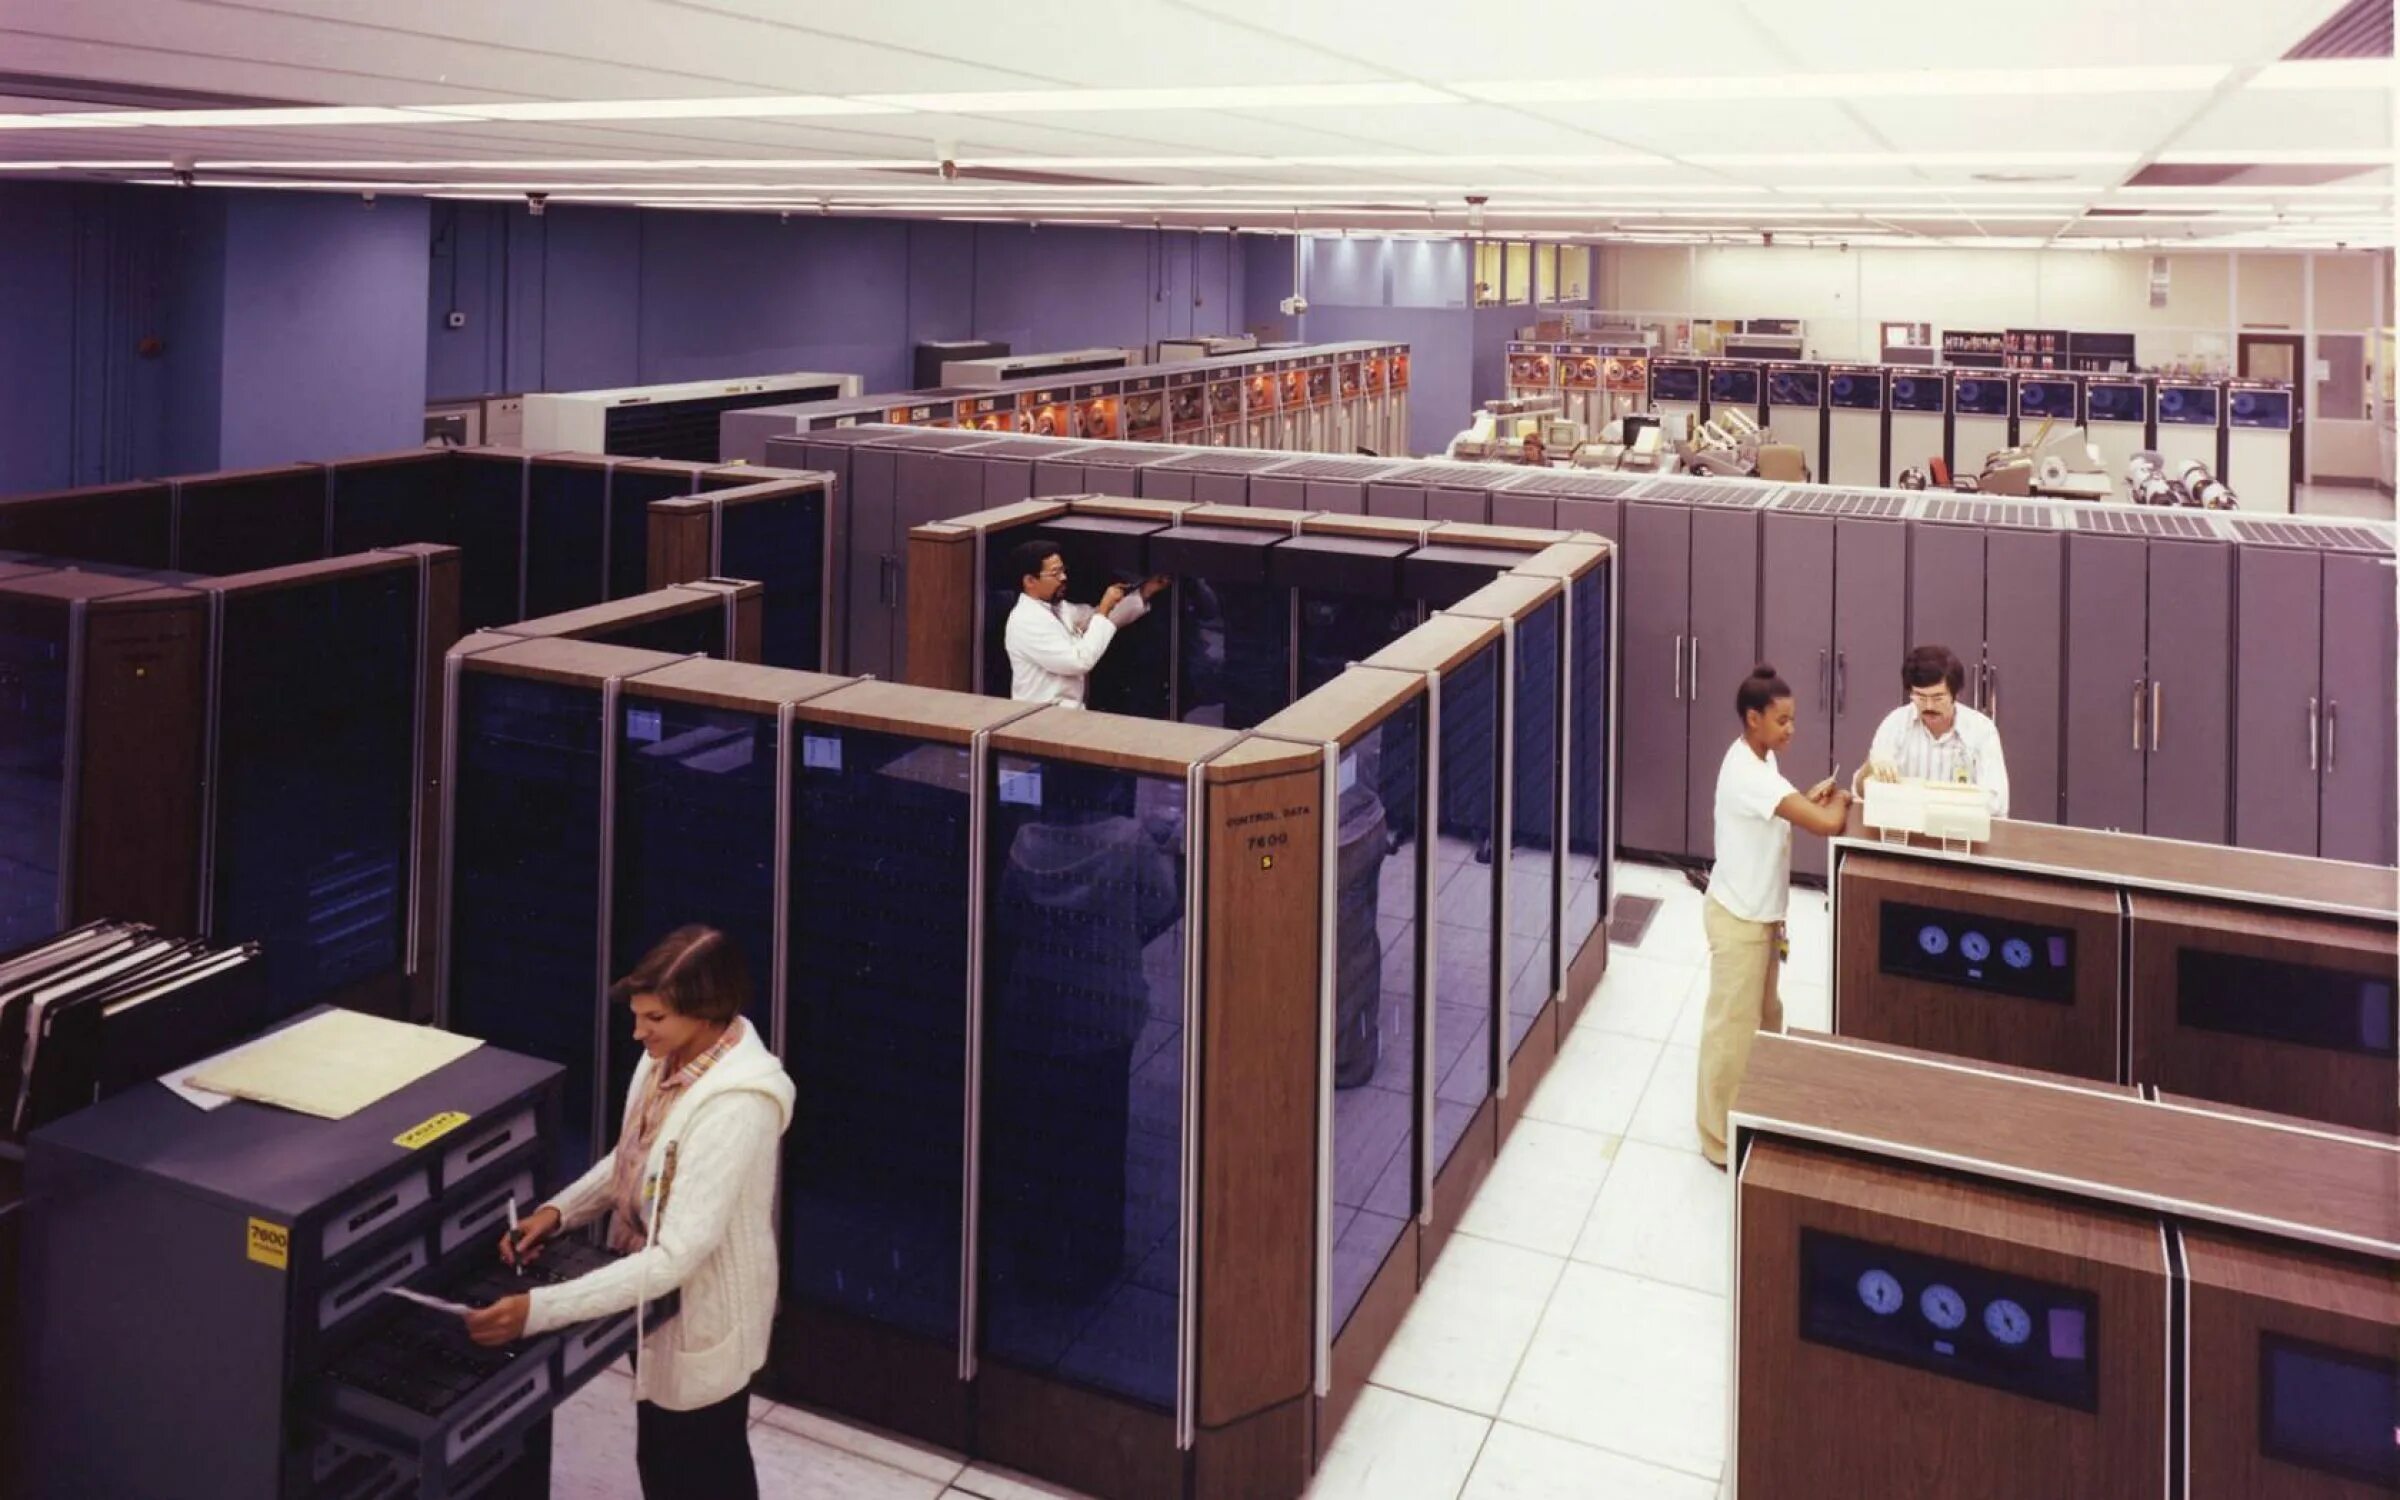 Суперкомпьютер CDC 7600. Cray 1 суперкомпьютер. Сеймур Крей суперкомпьютер Cray 1. Мейнфреймы 1970. Ас эвм